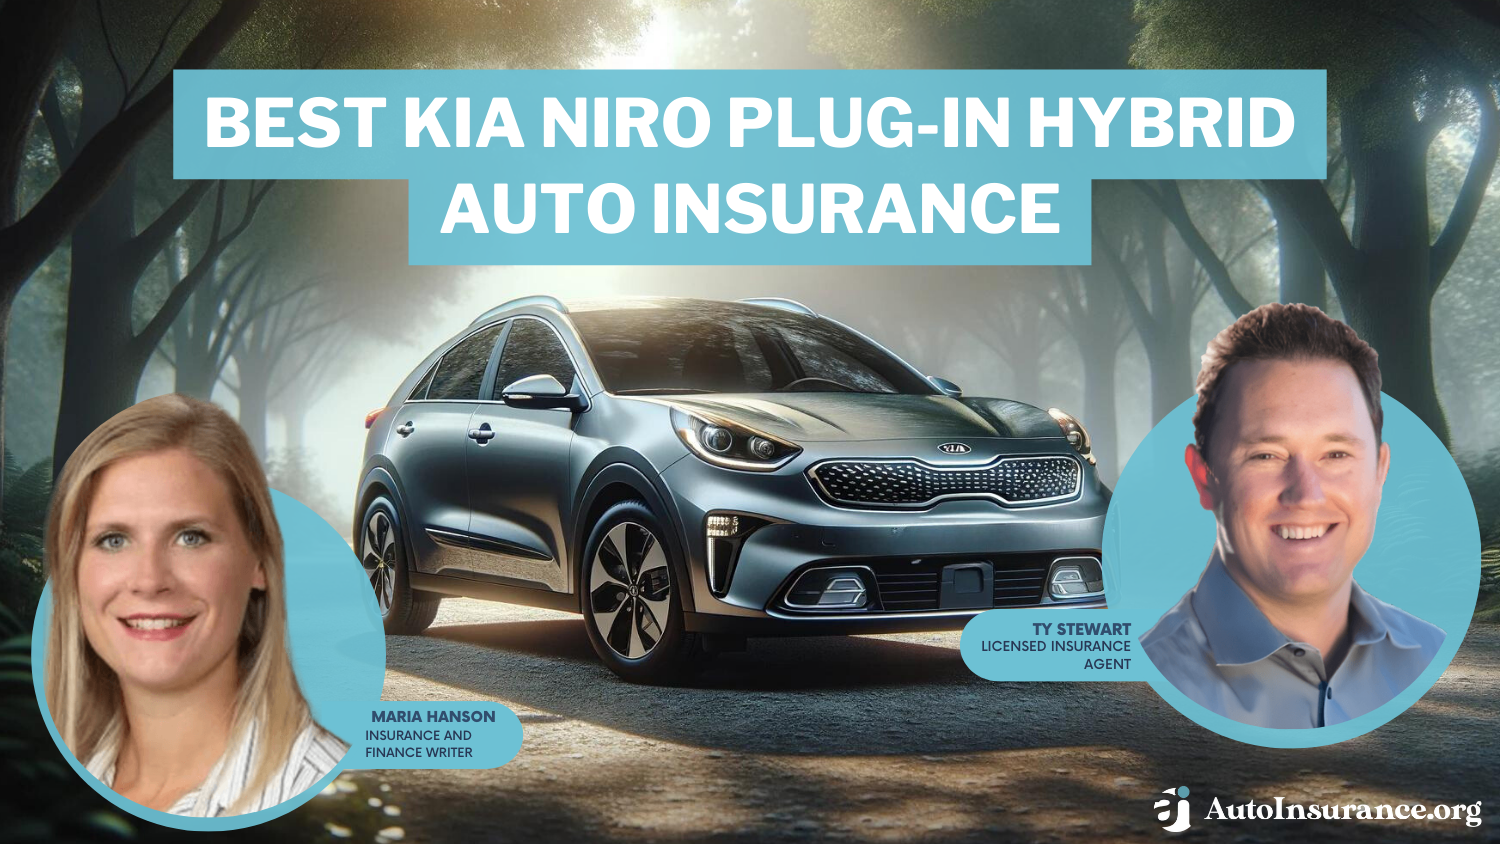 Best Kia Niro Plug-In Hybrid Auto Insurance: State Farm, AAA, and Allstate